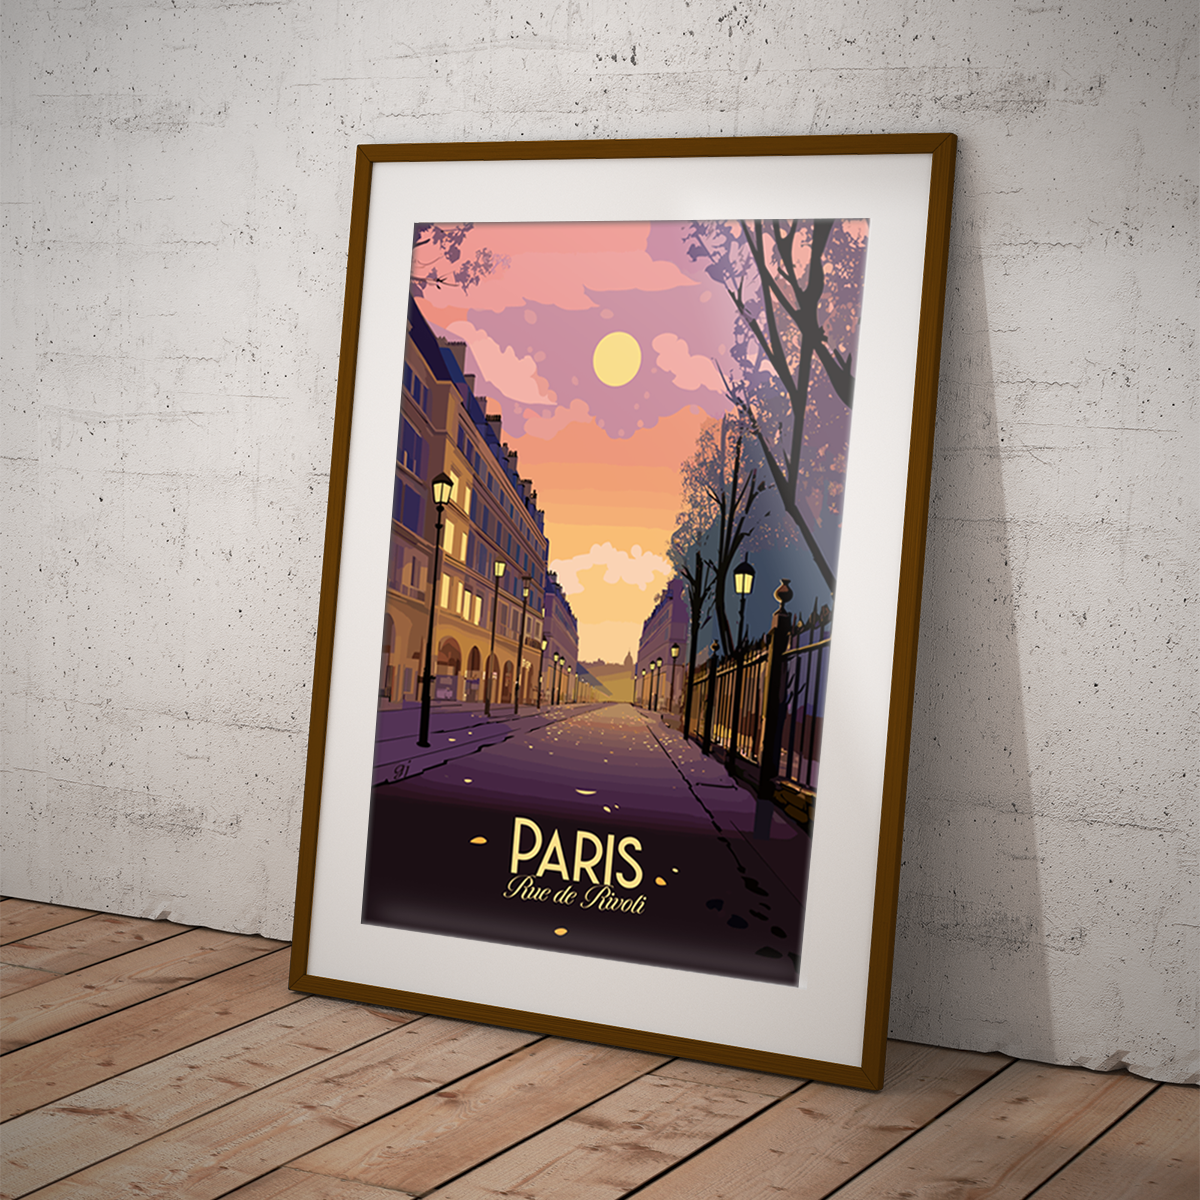 Paris - Rue de Rivoli poster by bon voyage design